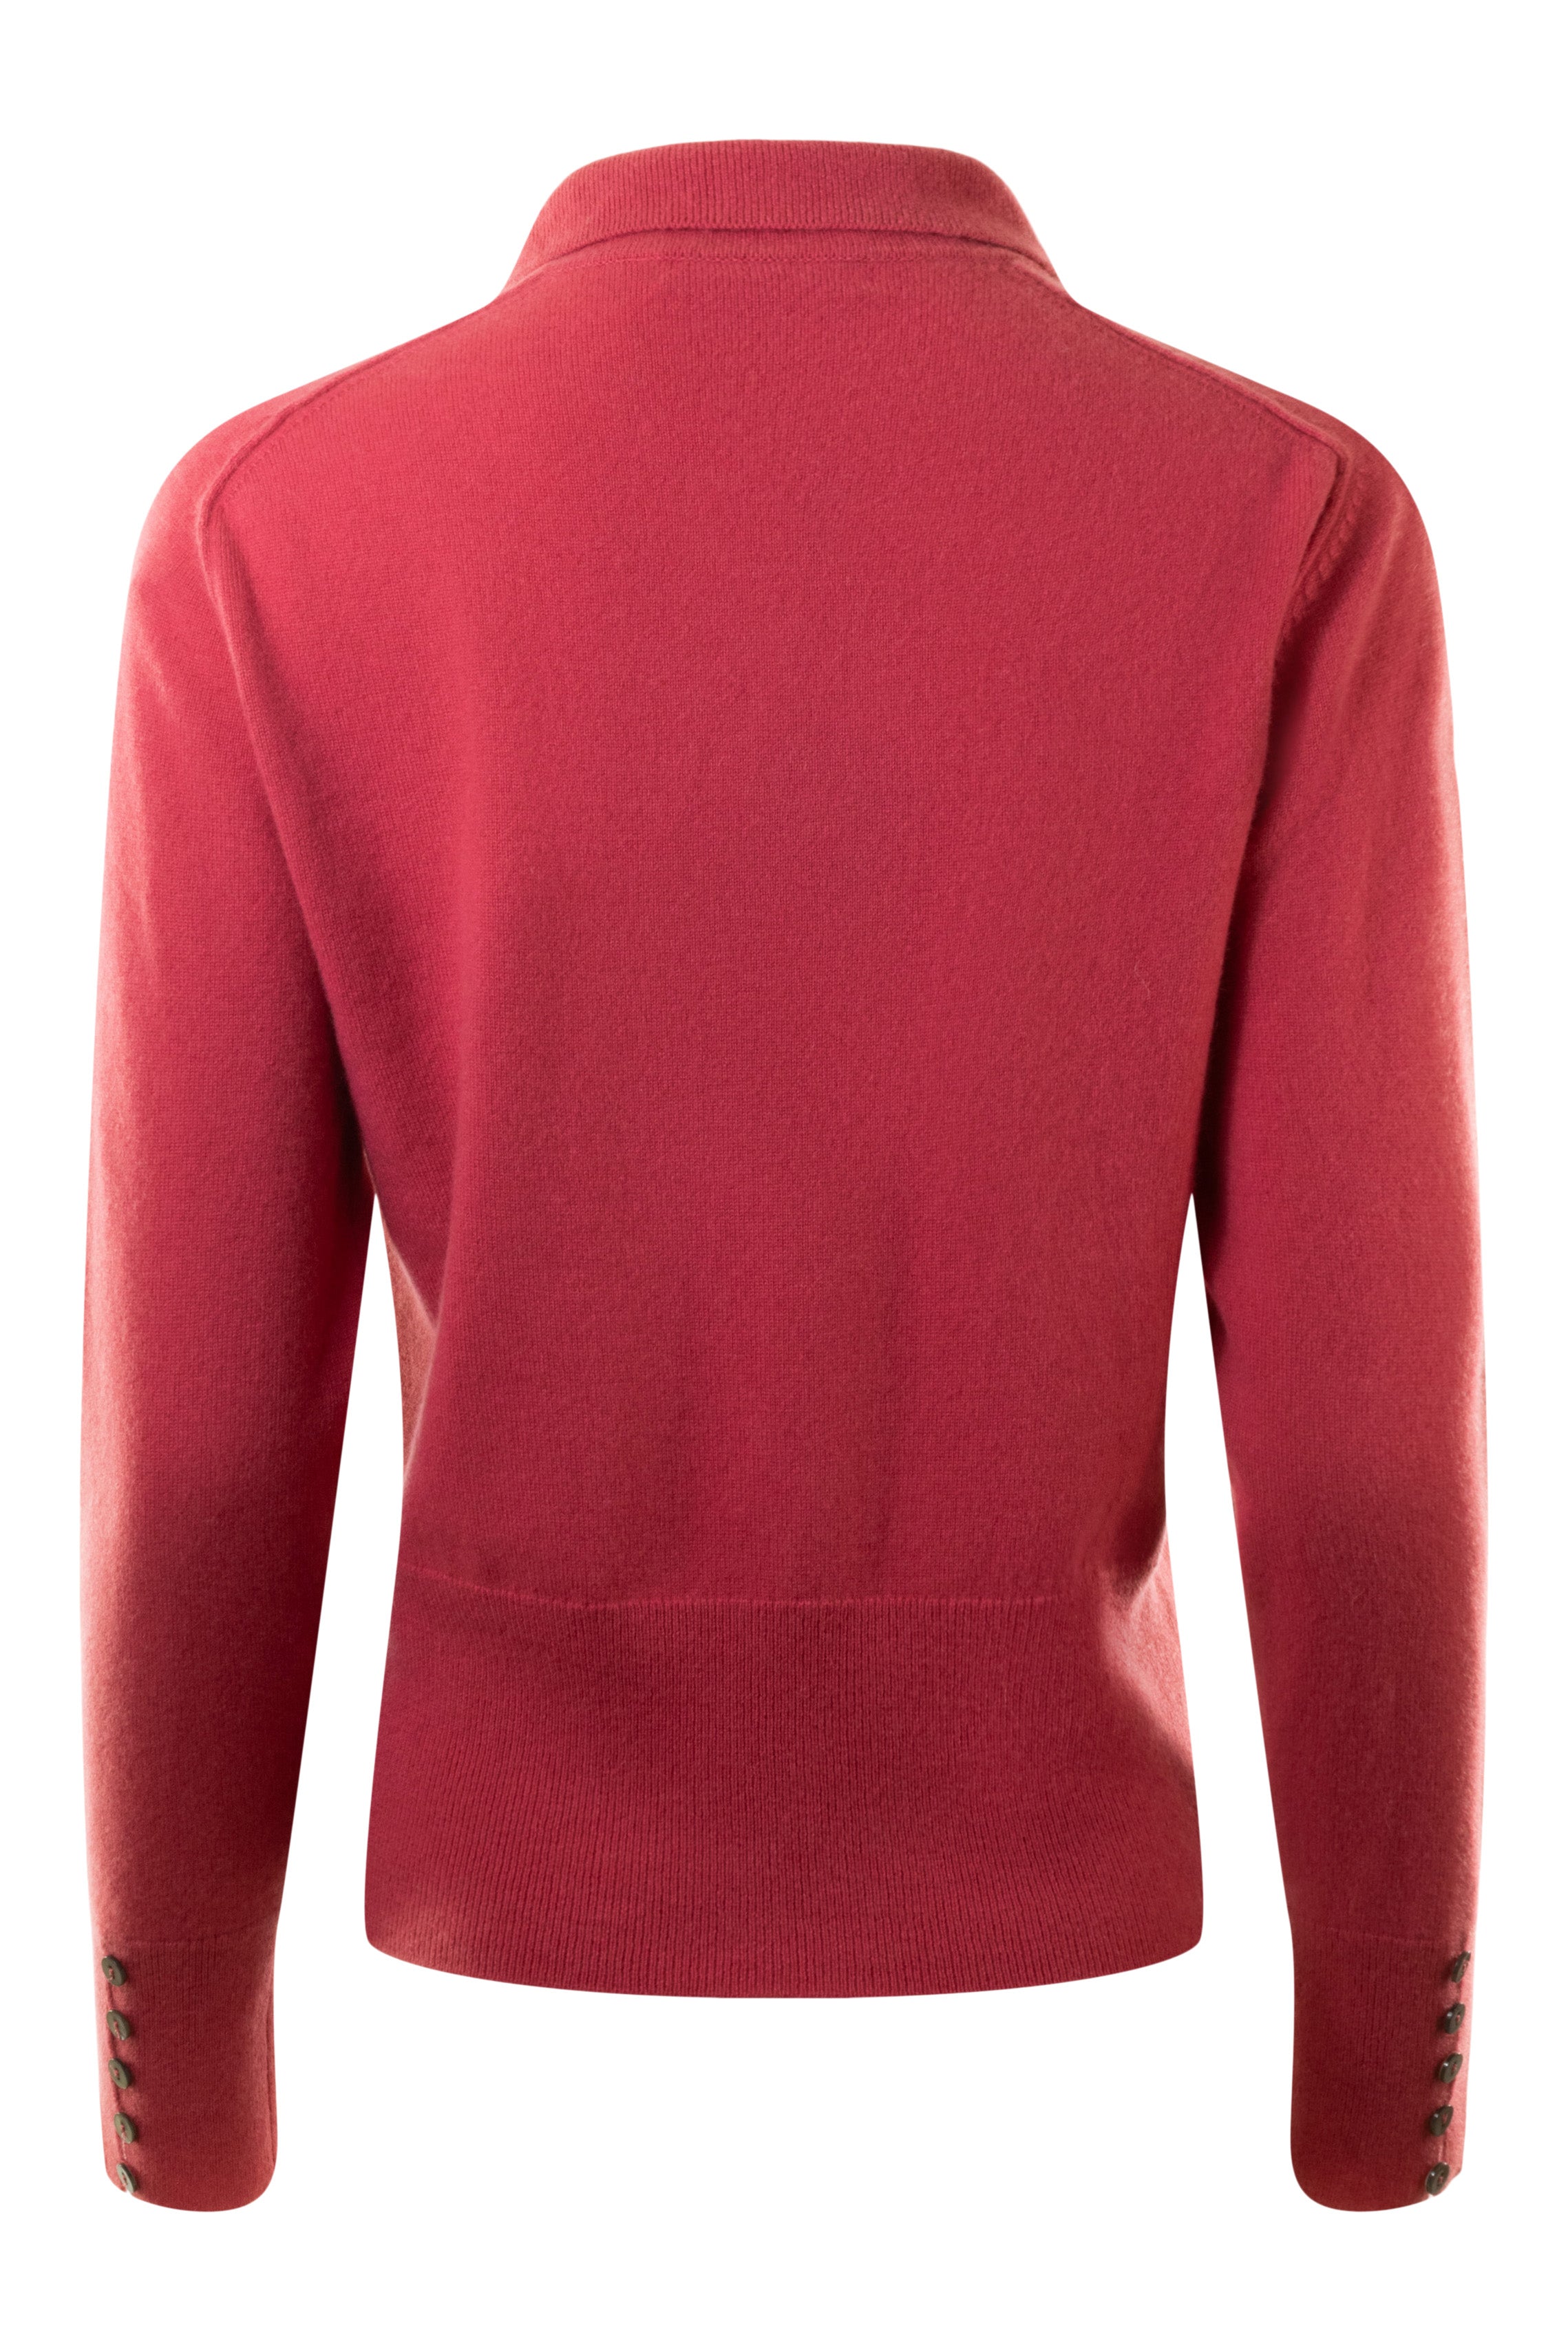 Repeat Cashmere Collared Crewneck Sweater in Strawberry